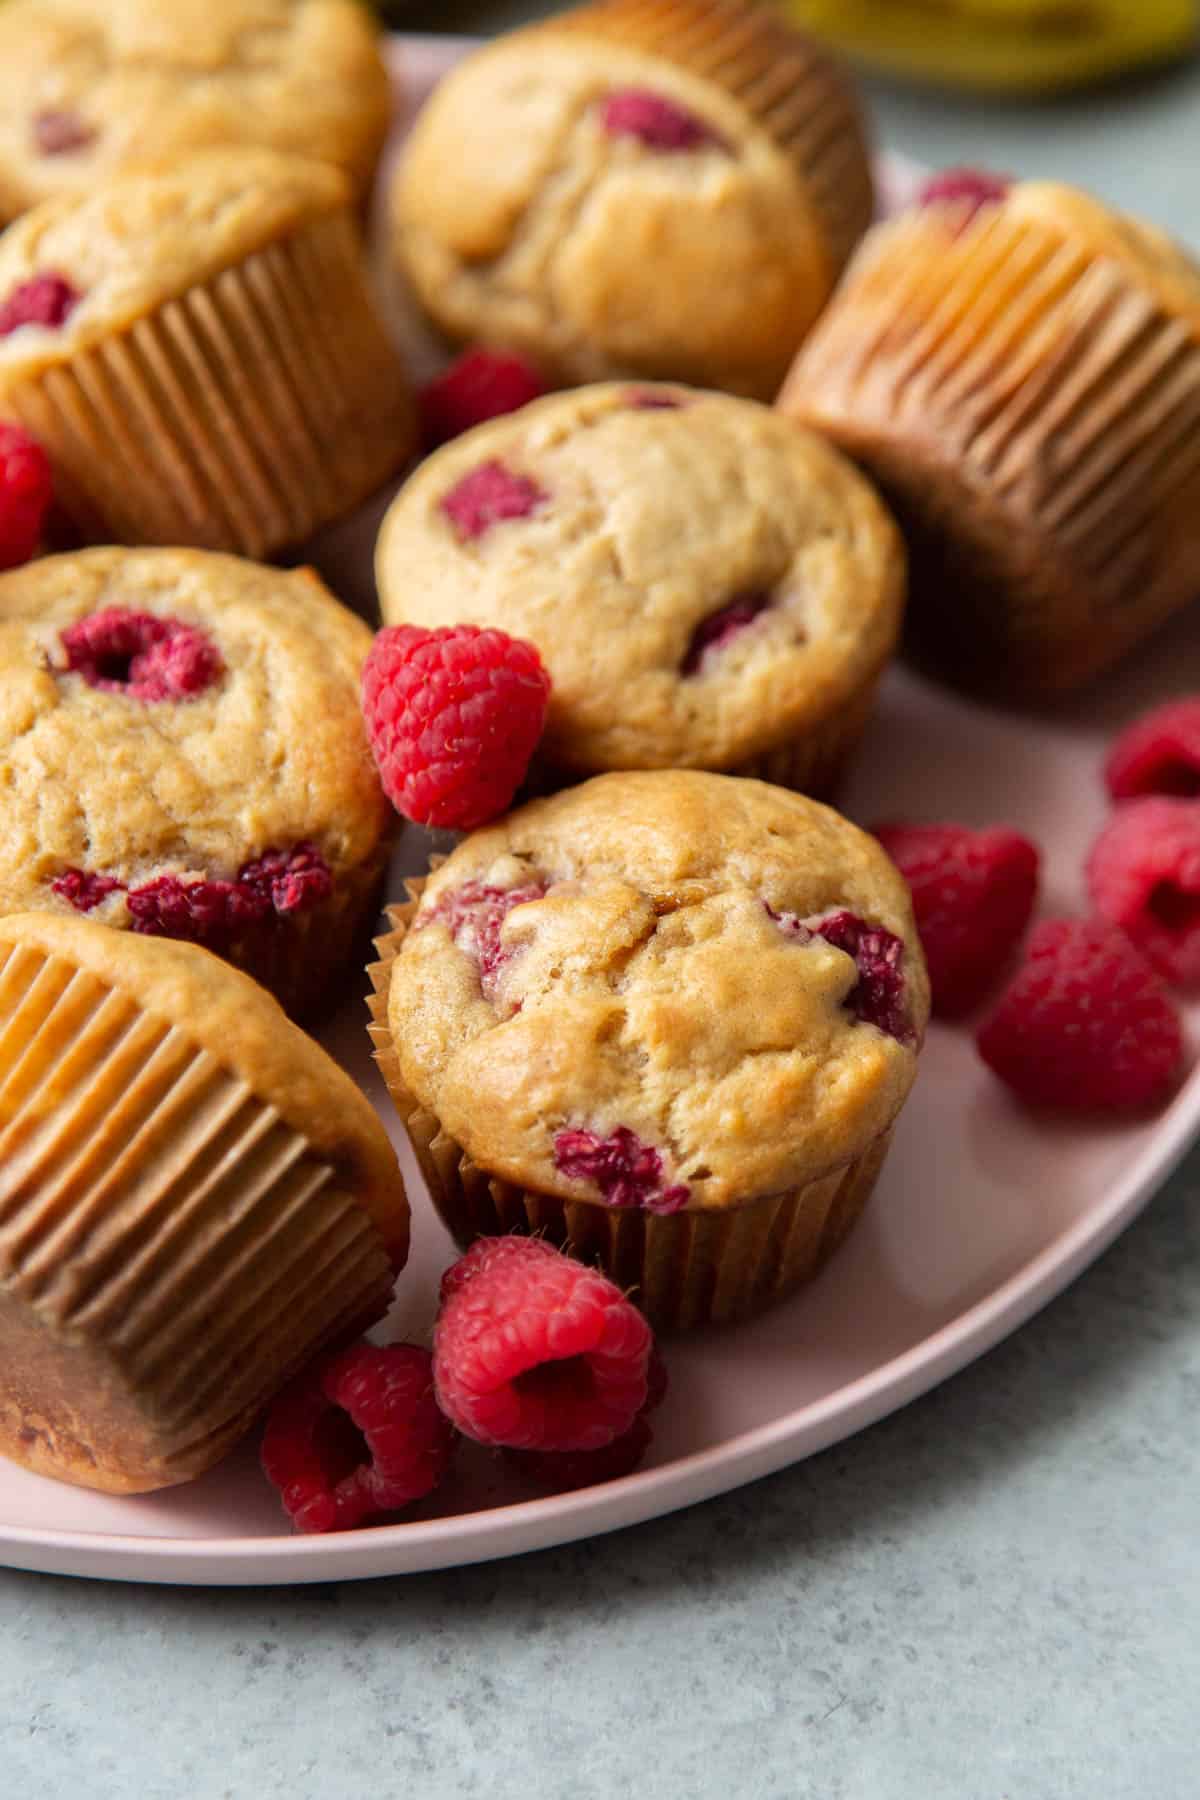 Banana Buttermilk Muffins with raspberries